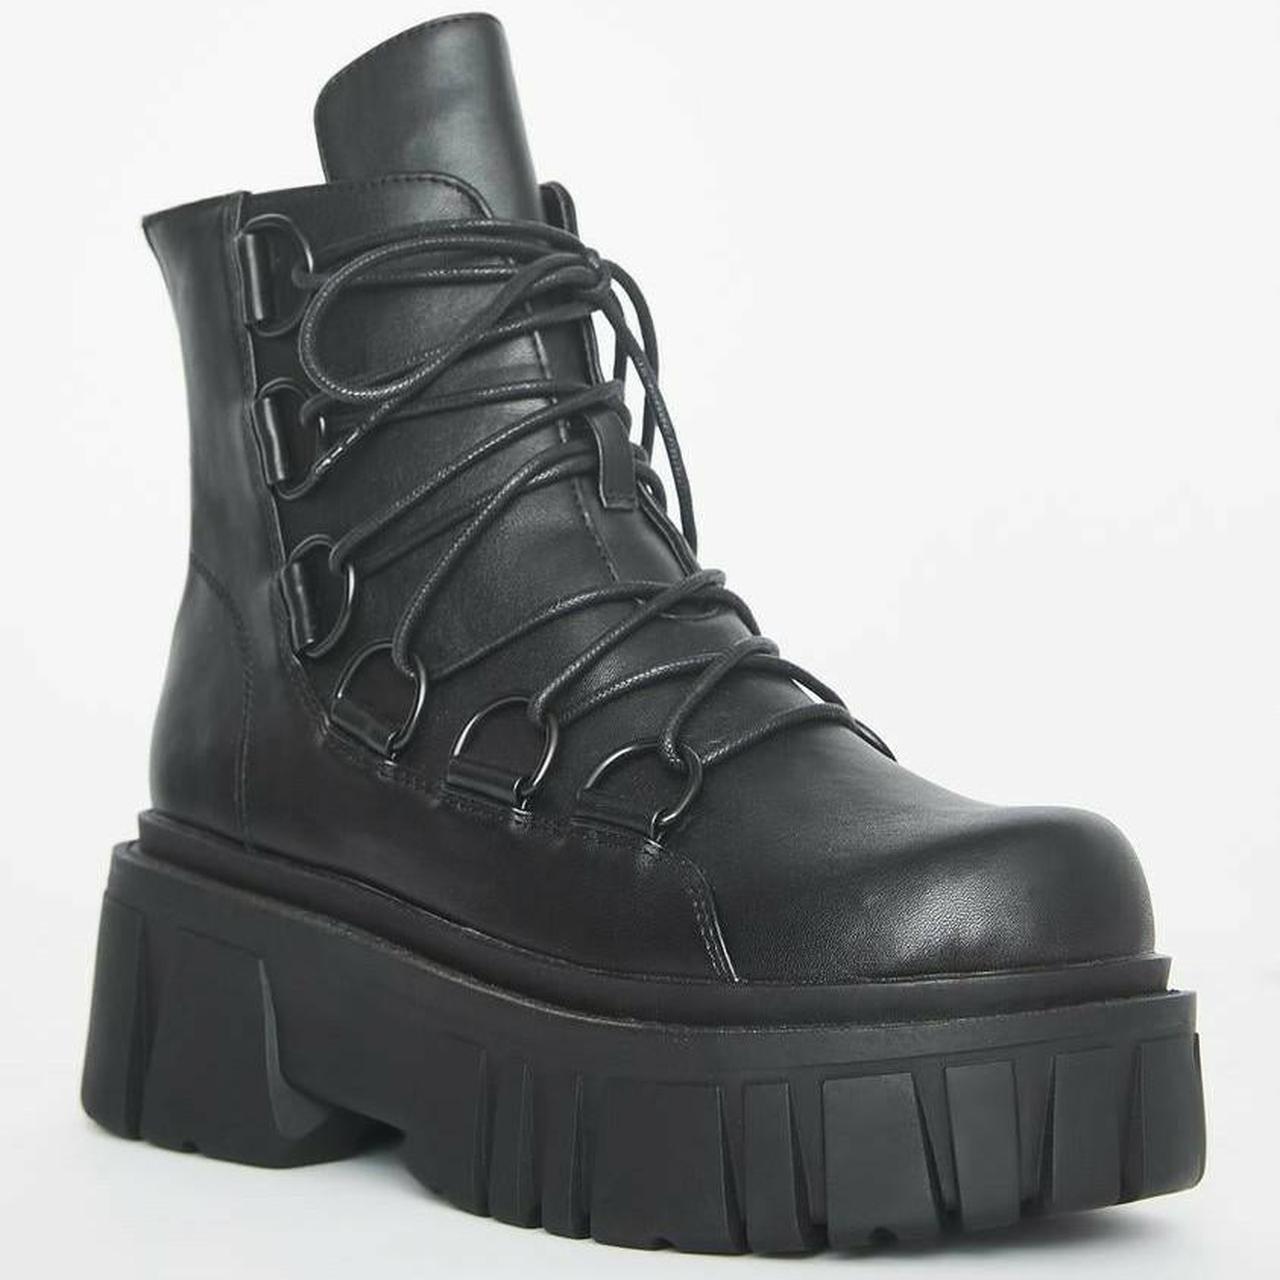 Black Platform Combat Boots Adjustable lace-ups... - Depop